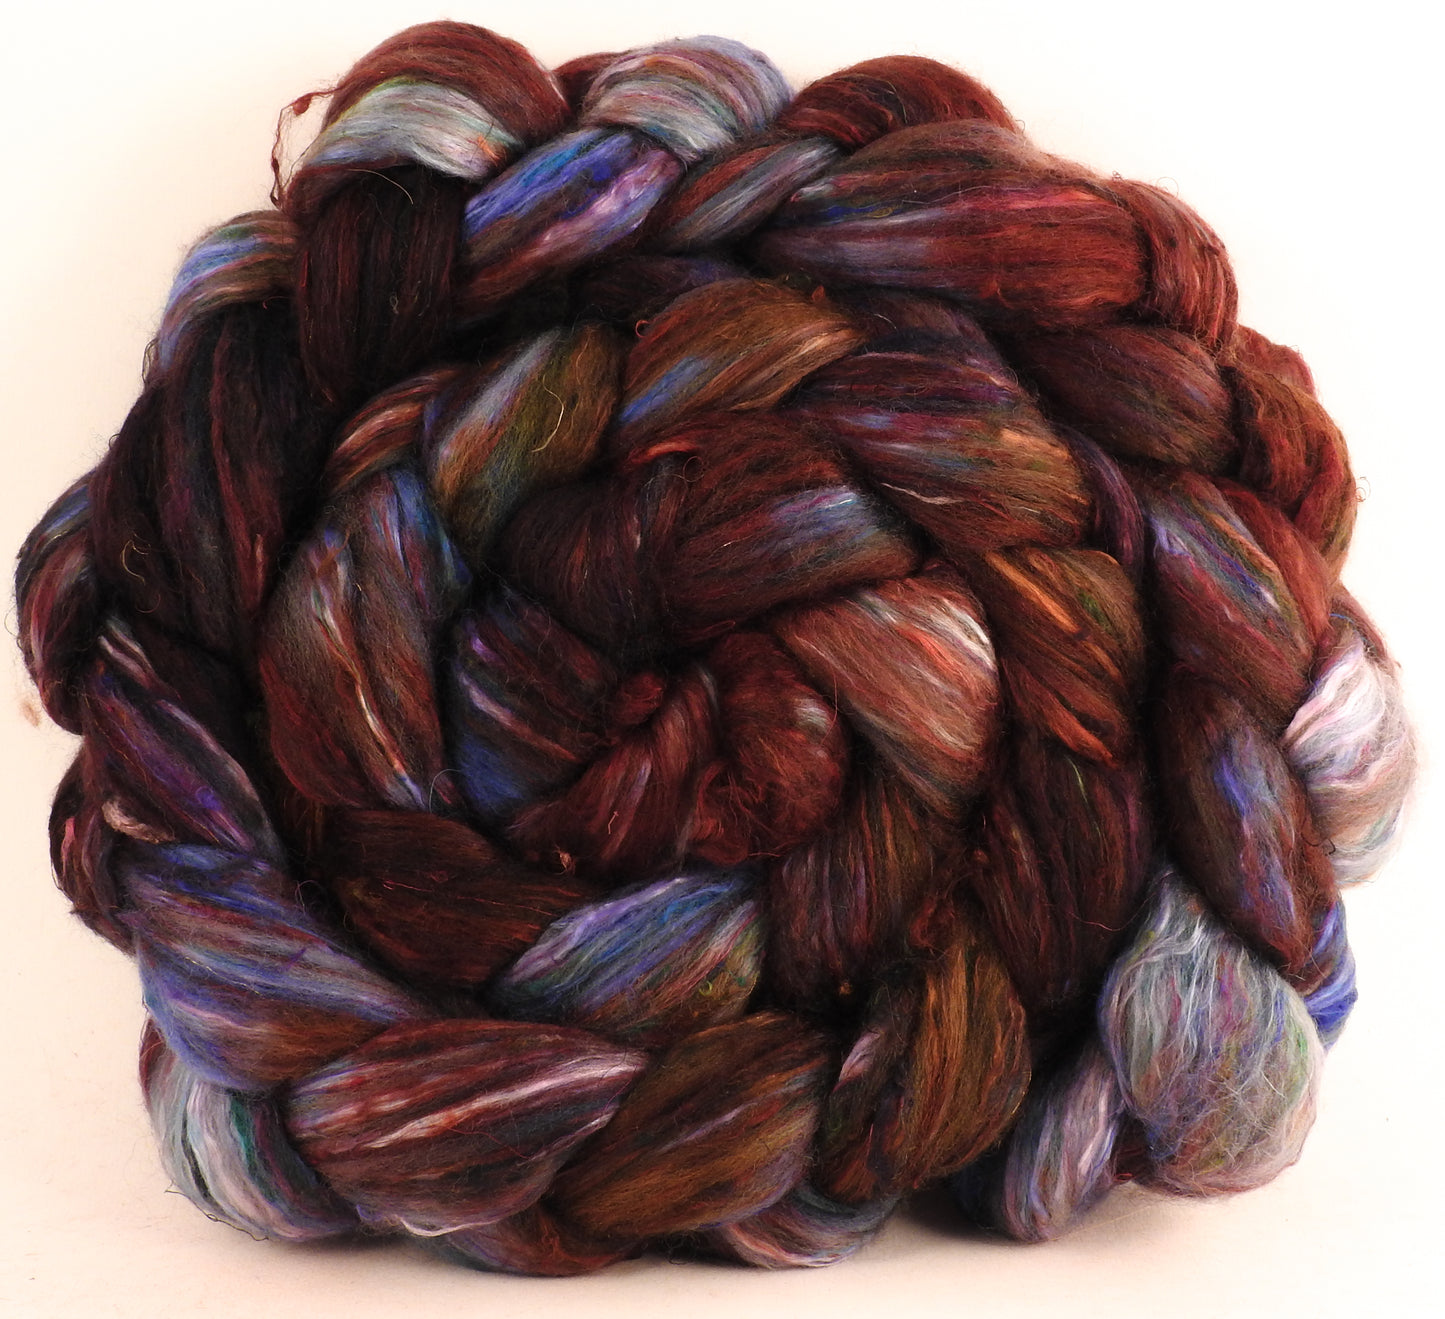 Batt in a Braid #39 - Singular 20 (5.6 oz) - Falkland Merino/ Mulberry Silk / Sari Silk (50/25/25)